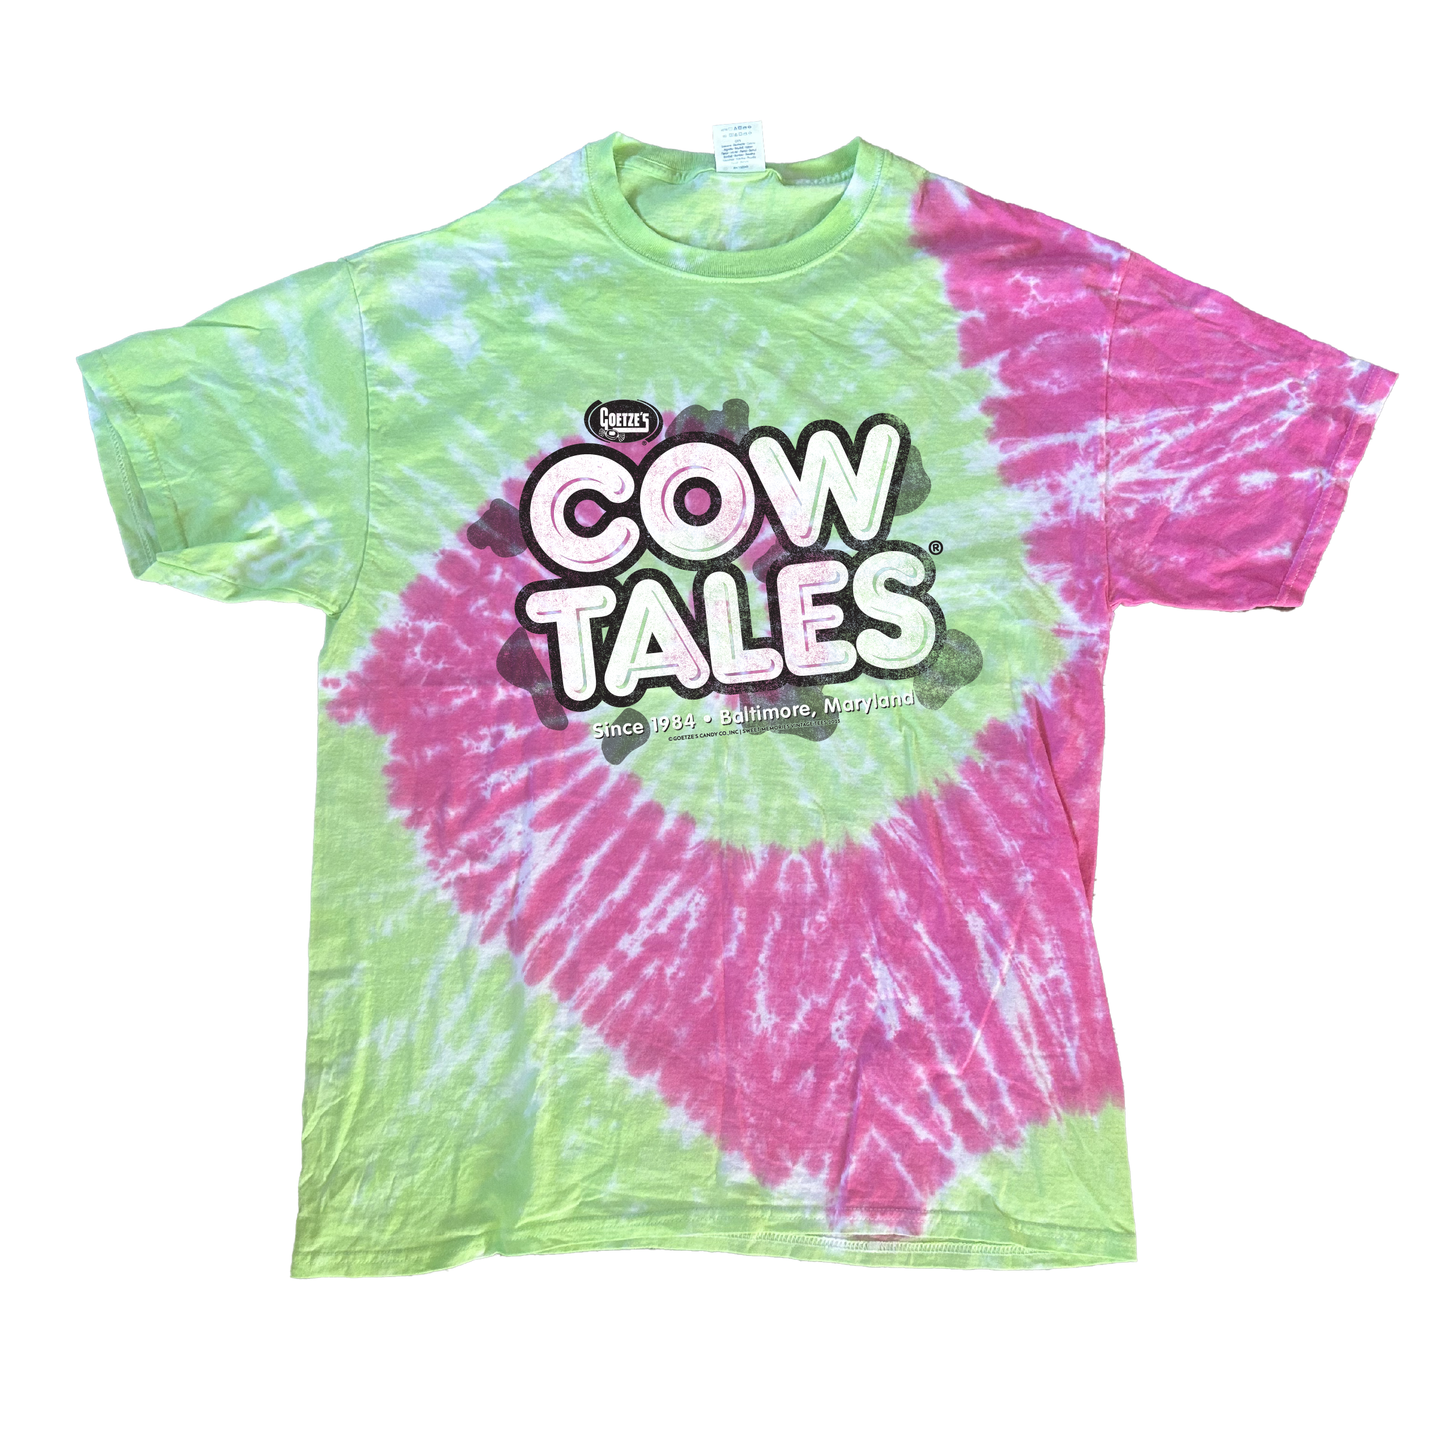 Goetze's Cow Tales Tie-Dye Tee